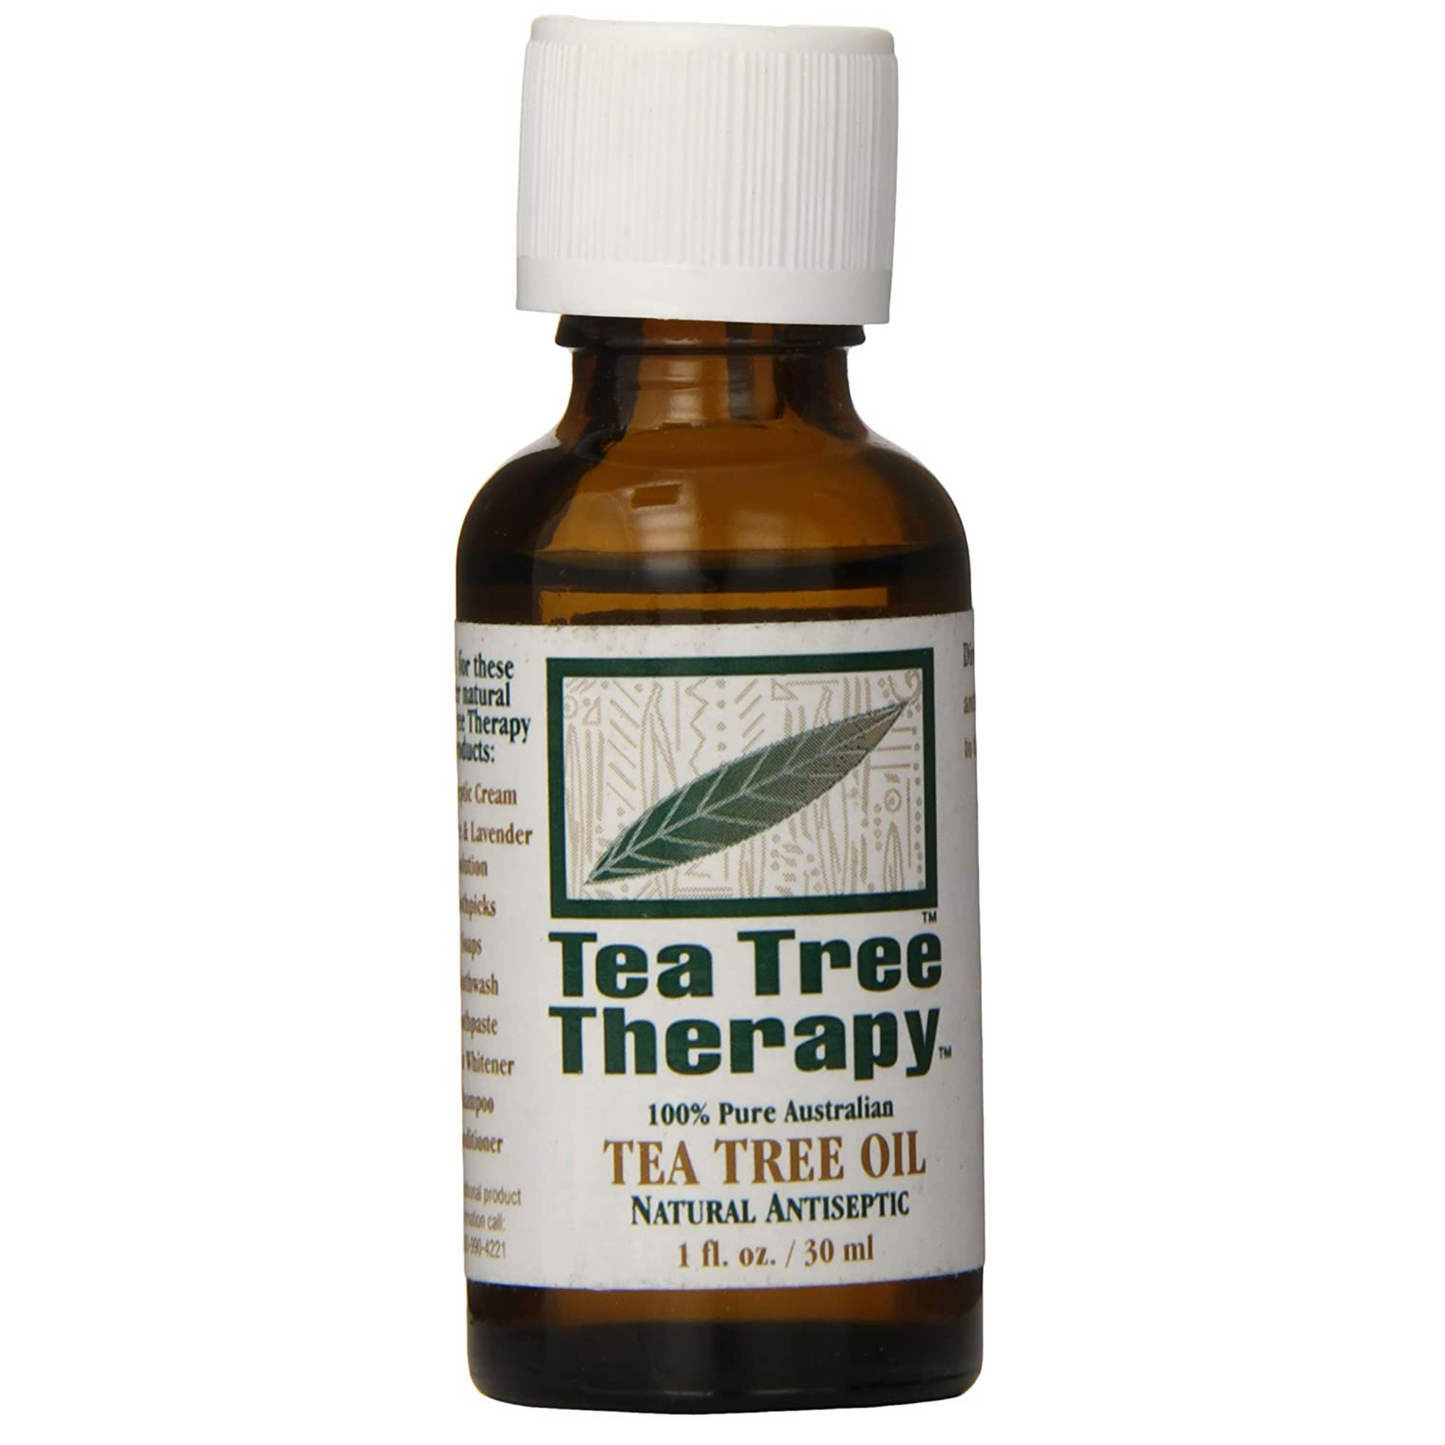 Tea Tree Therapy Tea Tree Oil (1.0 fl oz) #10085210